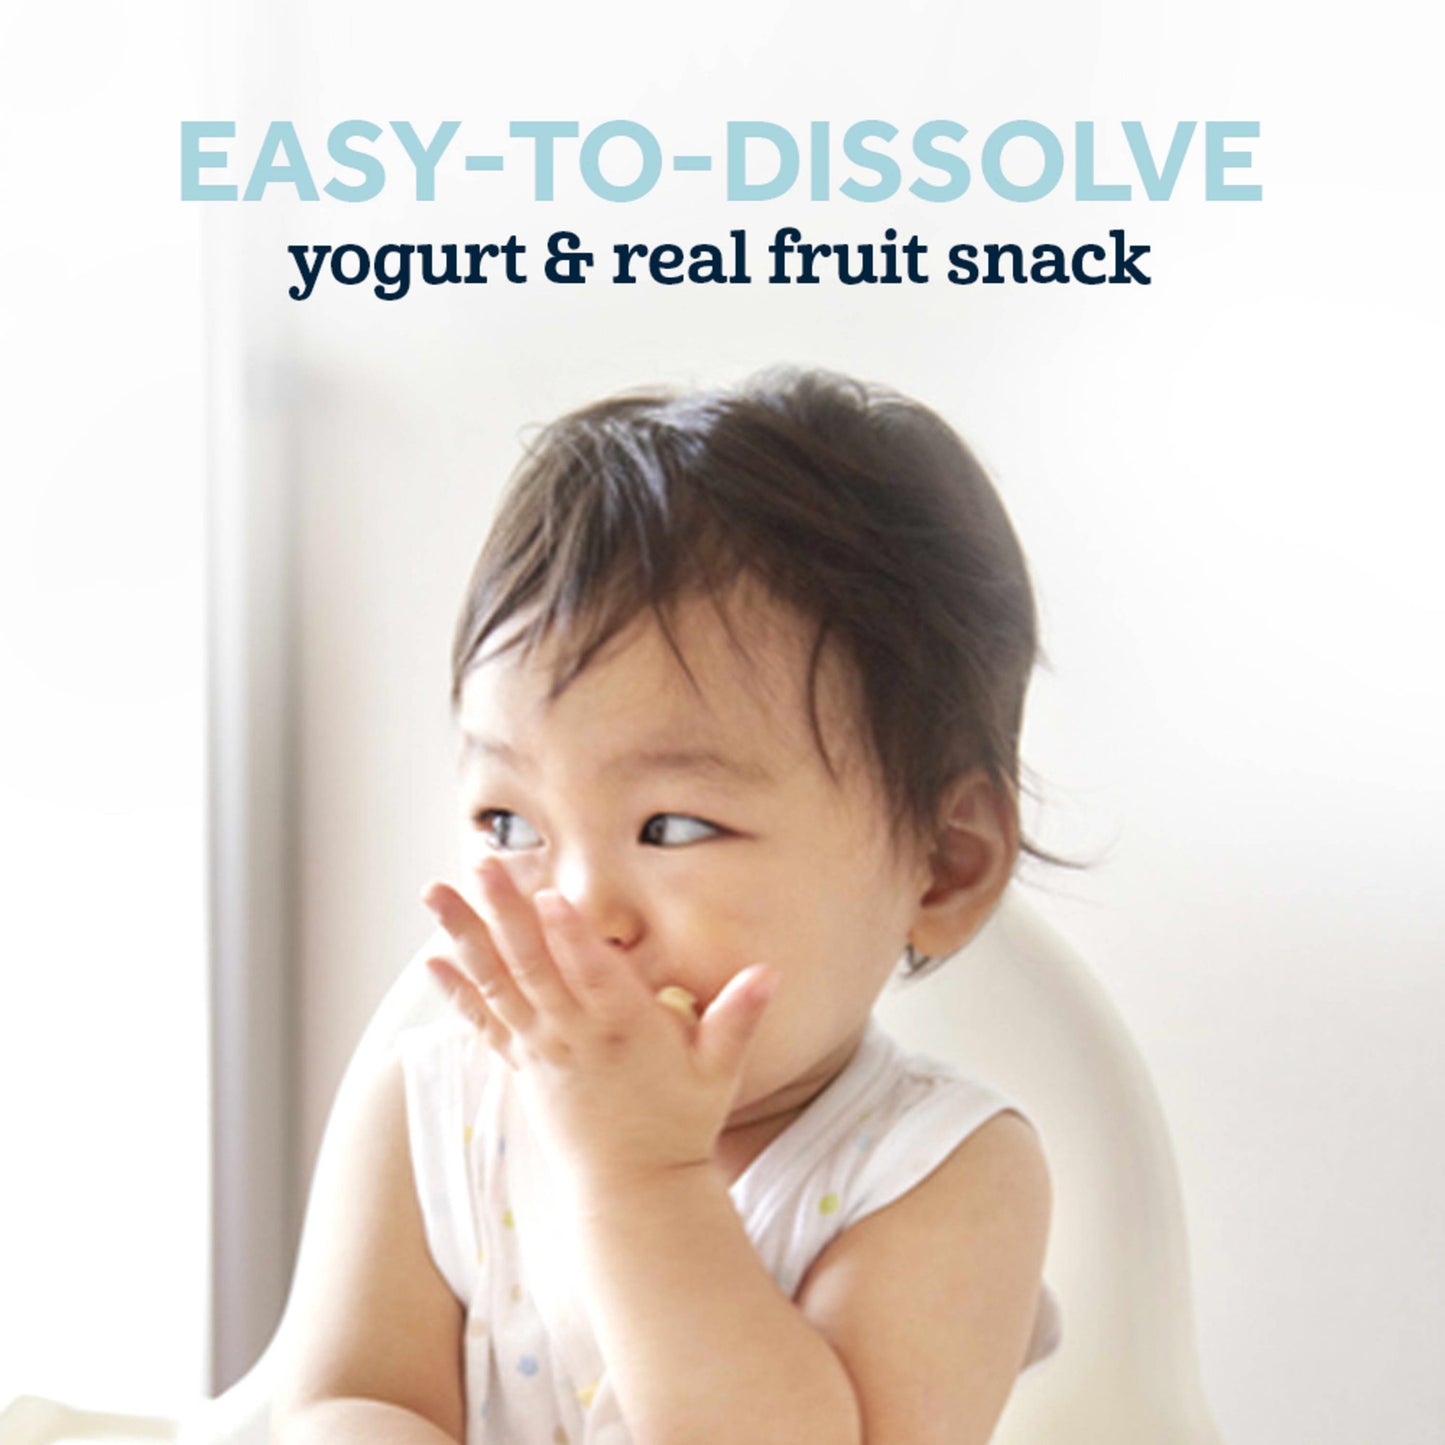 Gerber Snacks for Baby Yogurt Melts, Strawberry, 1 oz Bag